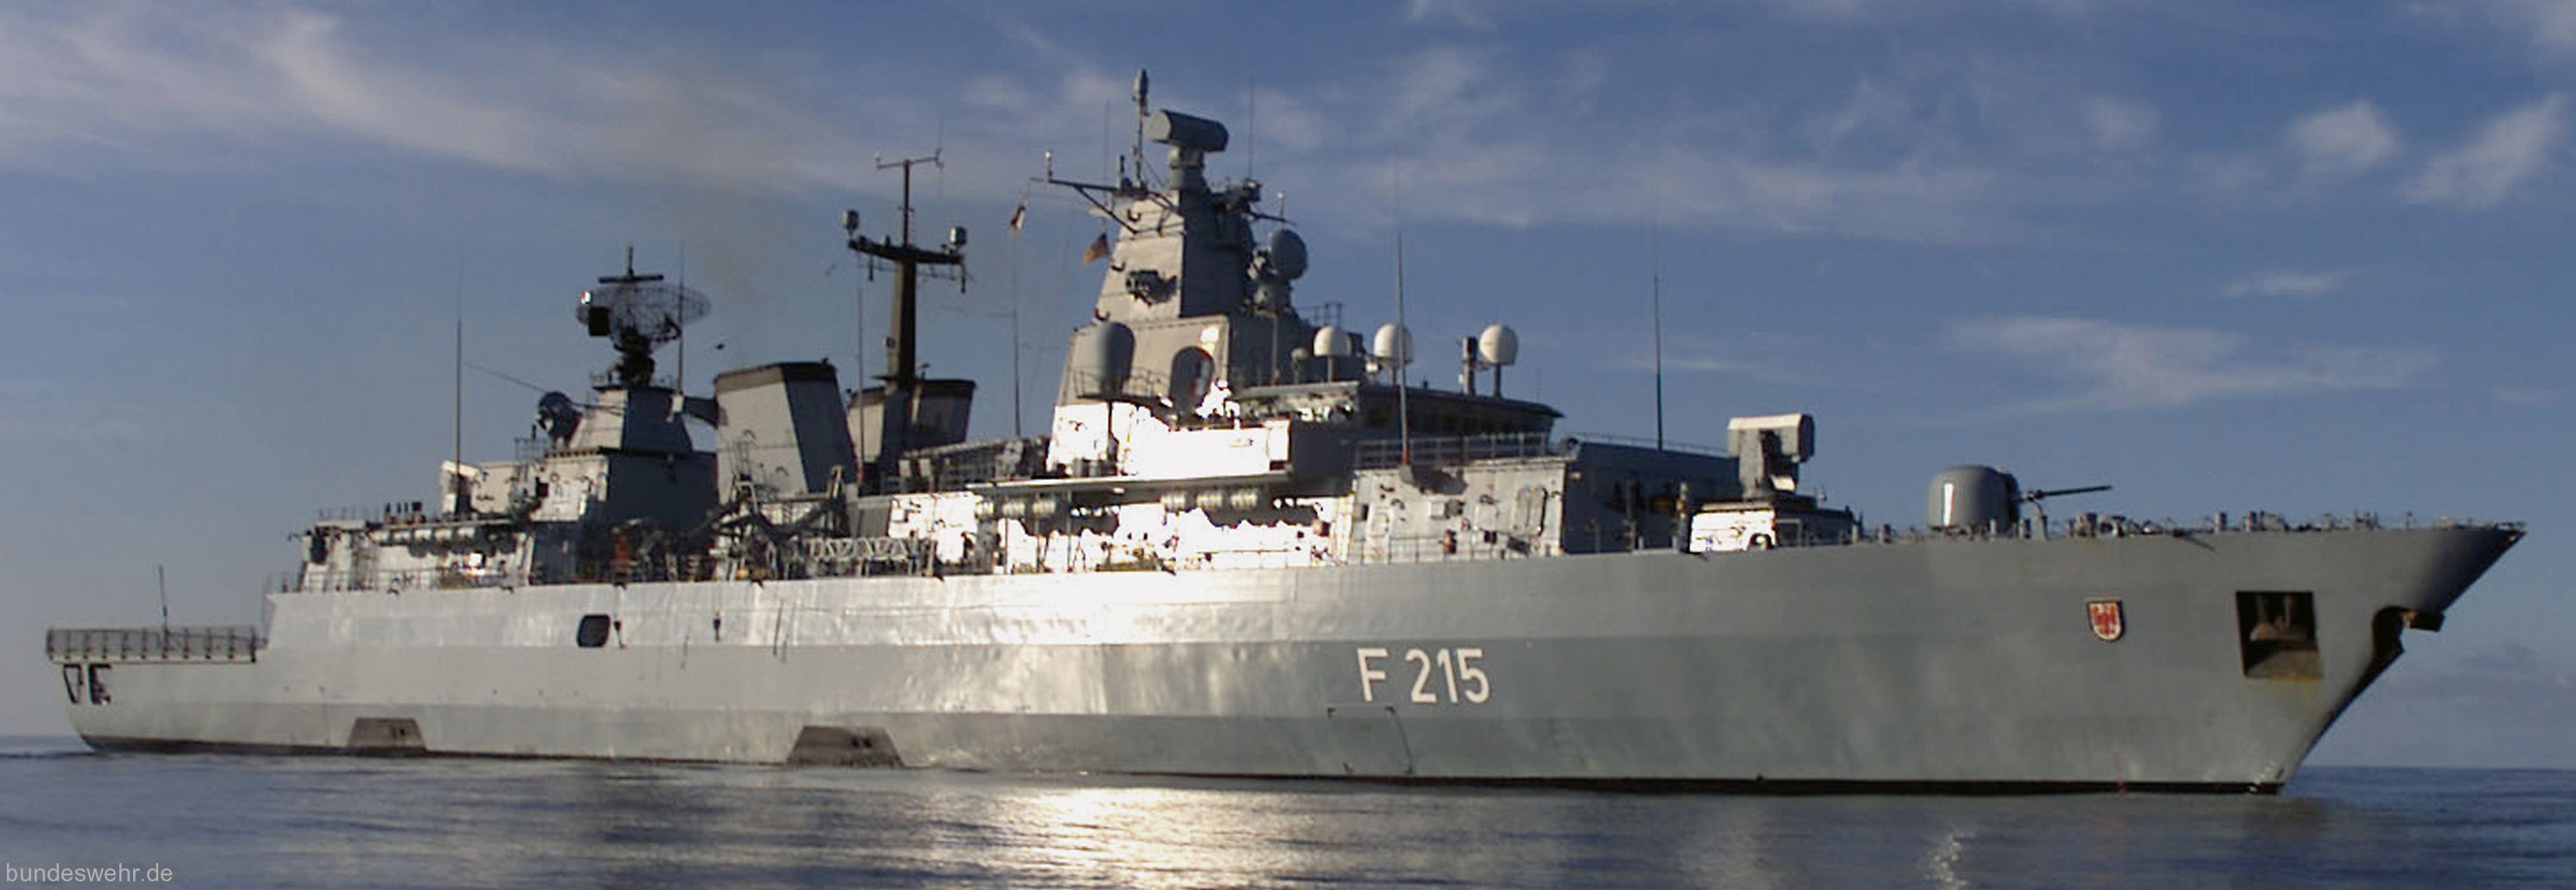 f-215 fgs brandenburg type 123 class frigate german navy 21